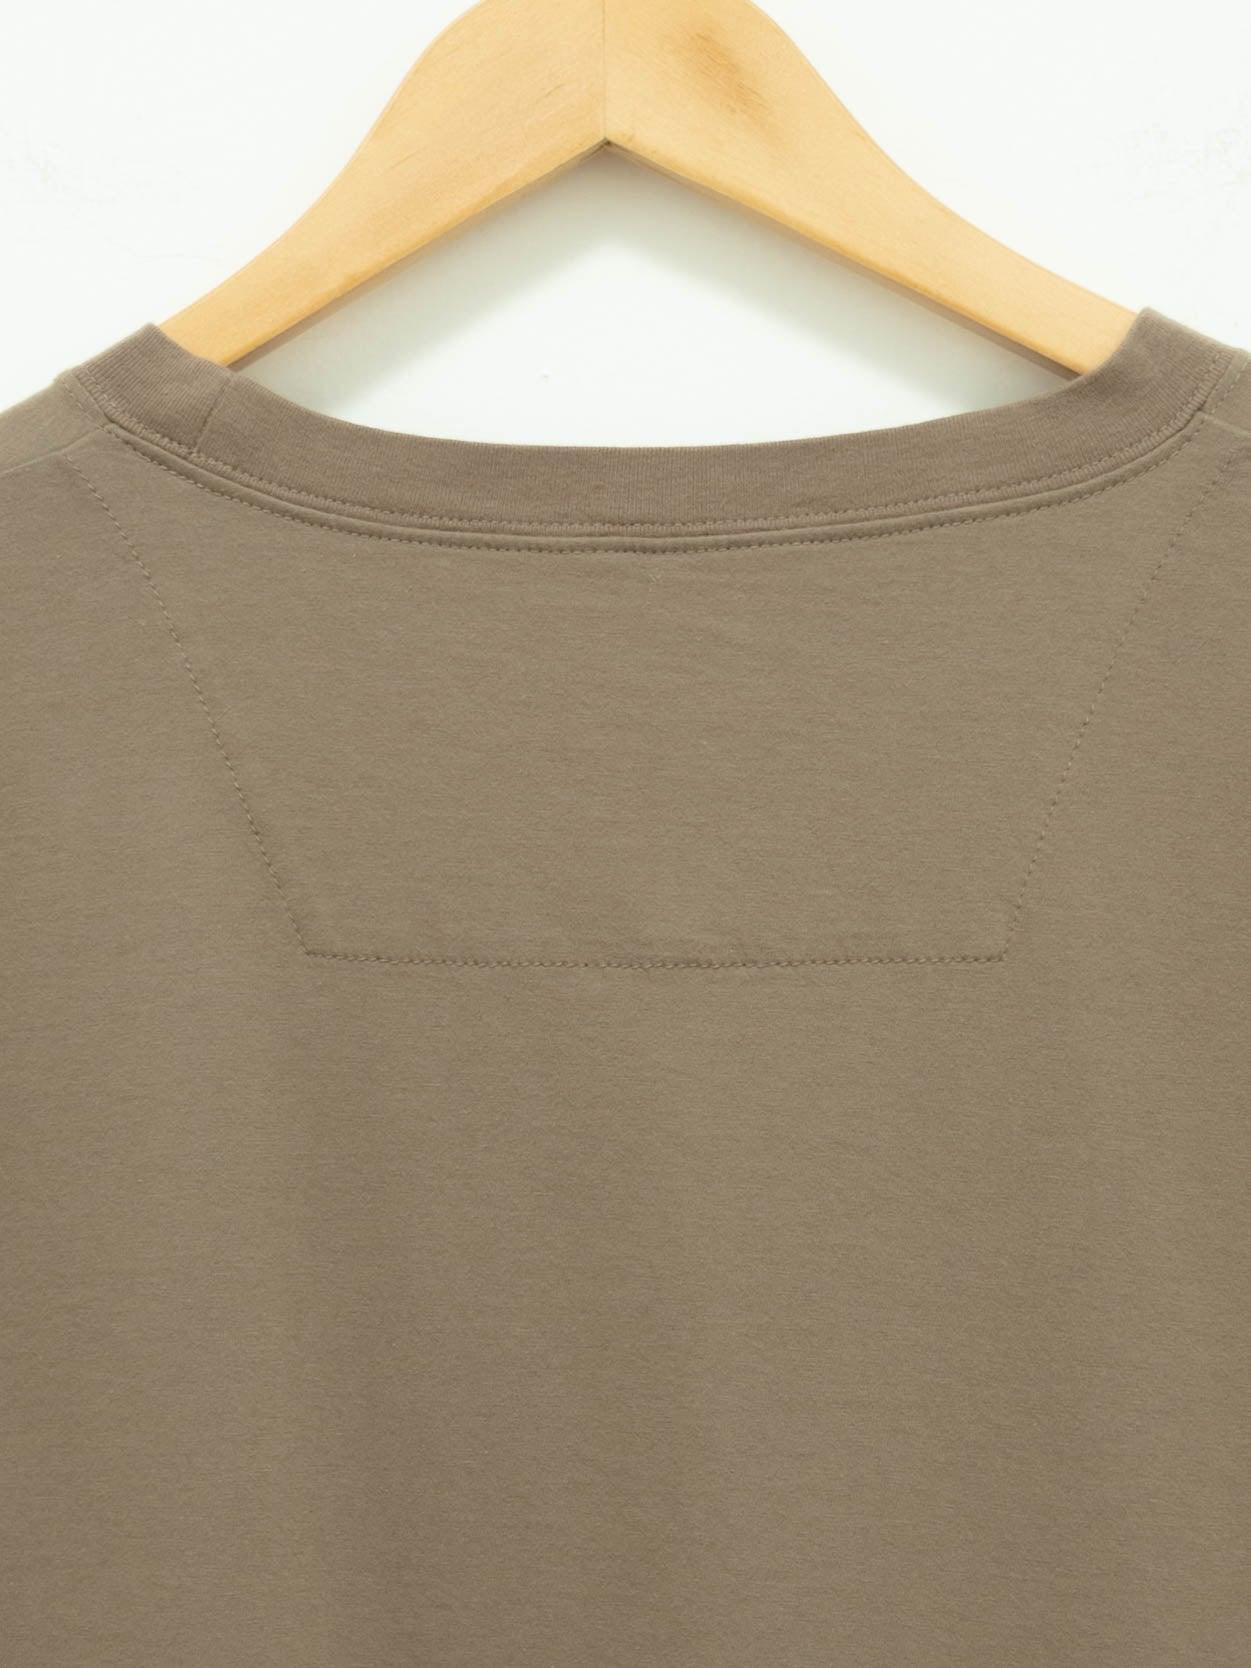 Namu Shop - ts(s) High Gauge Cotton Jersey Crewneck T-Shirt - Khaki